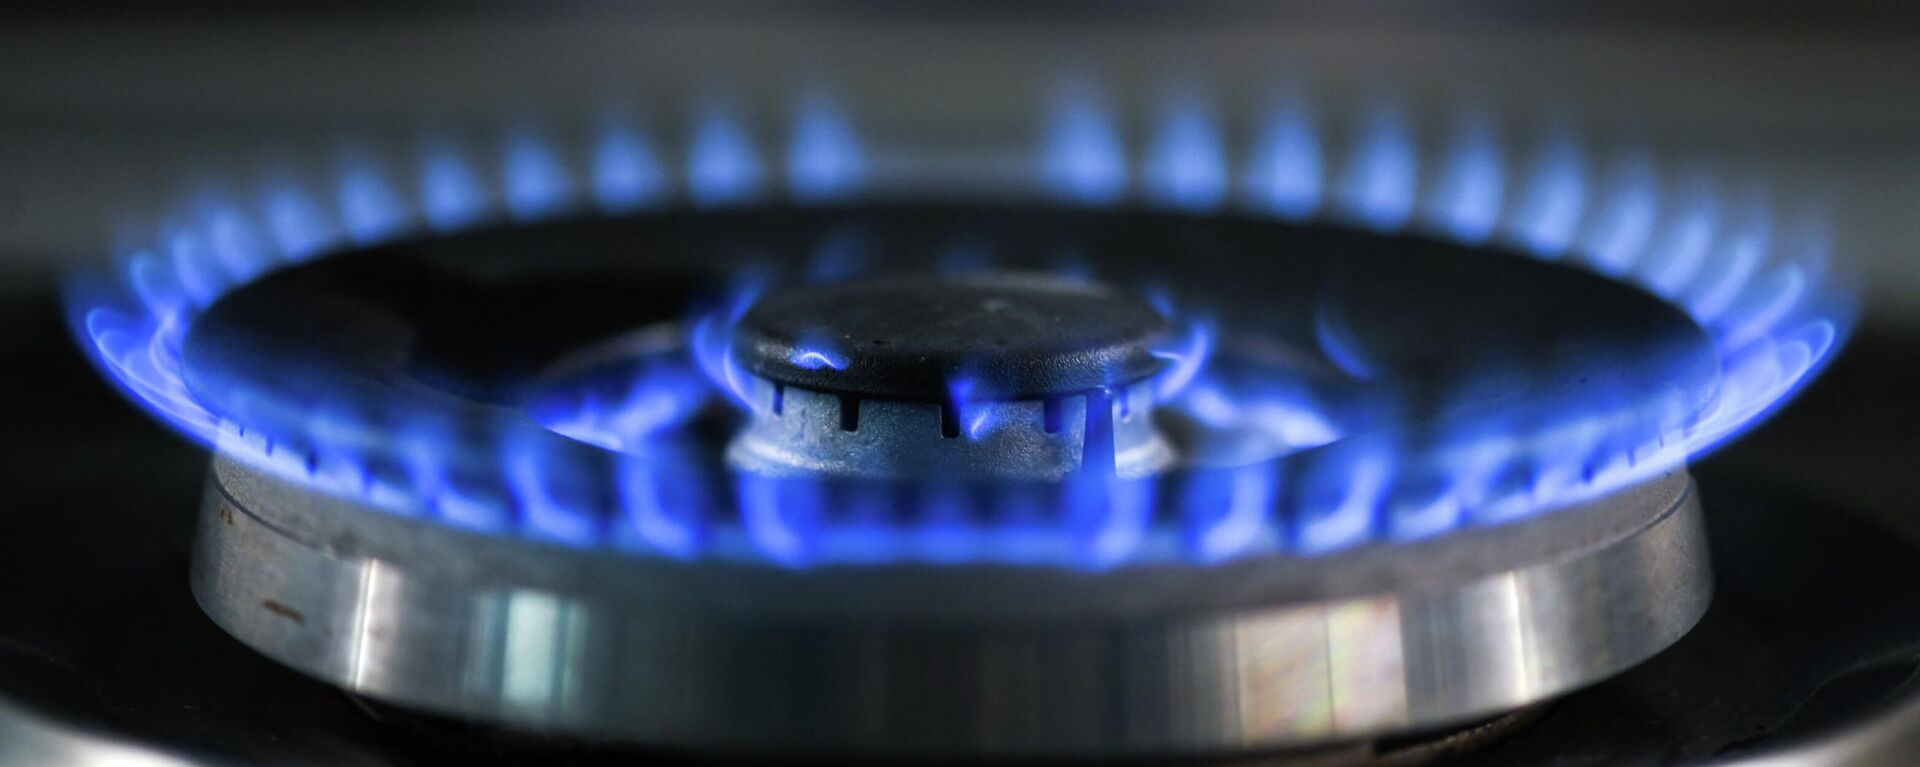 Flames of a lit burner of a gas stove. File photo - Sputnik International, 1920, 10.09.2022